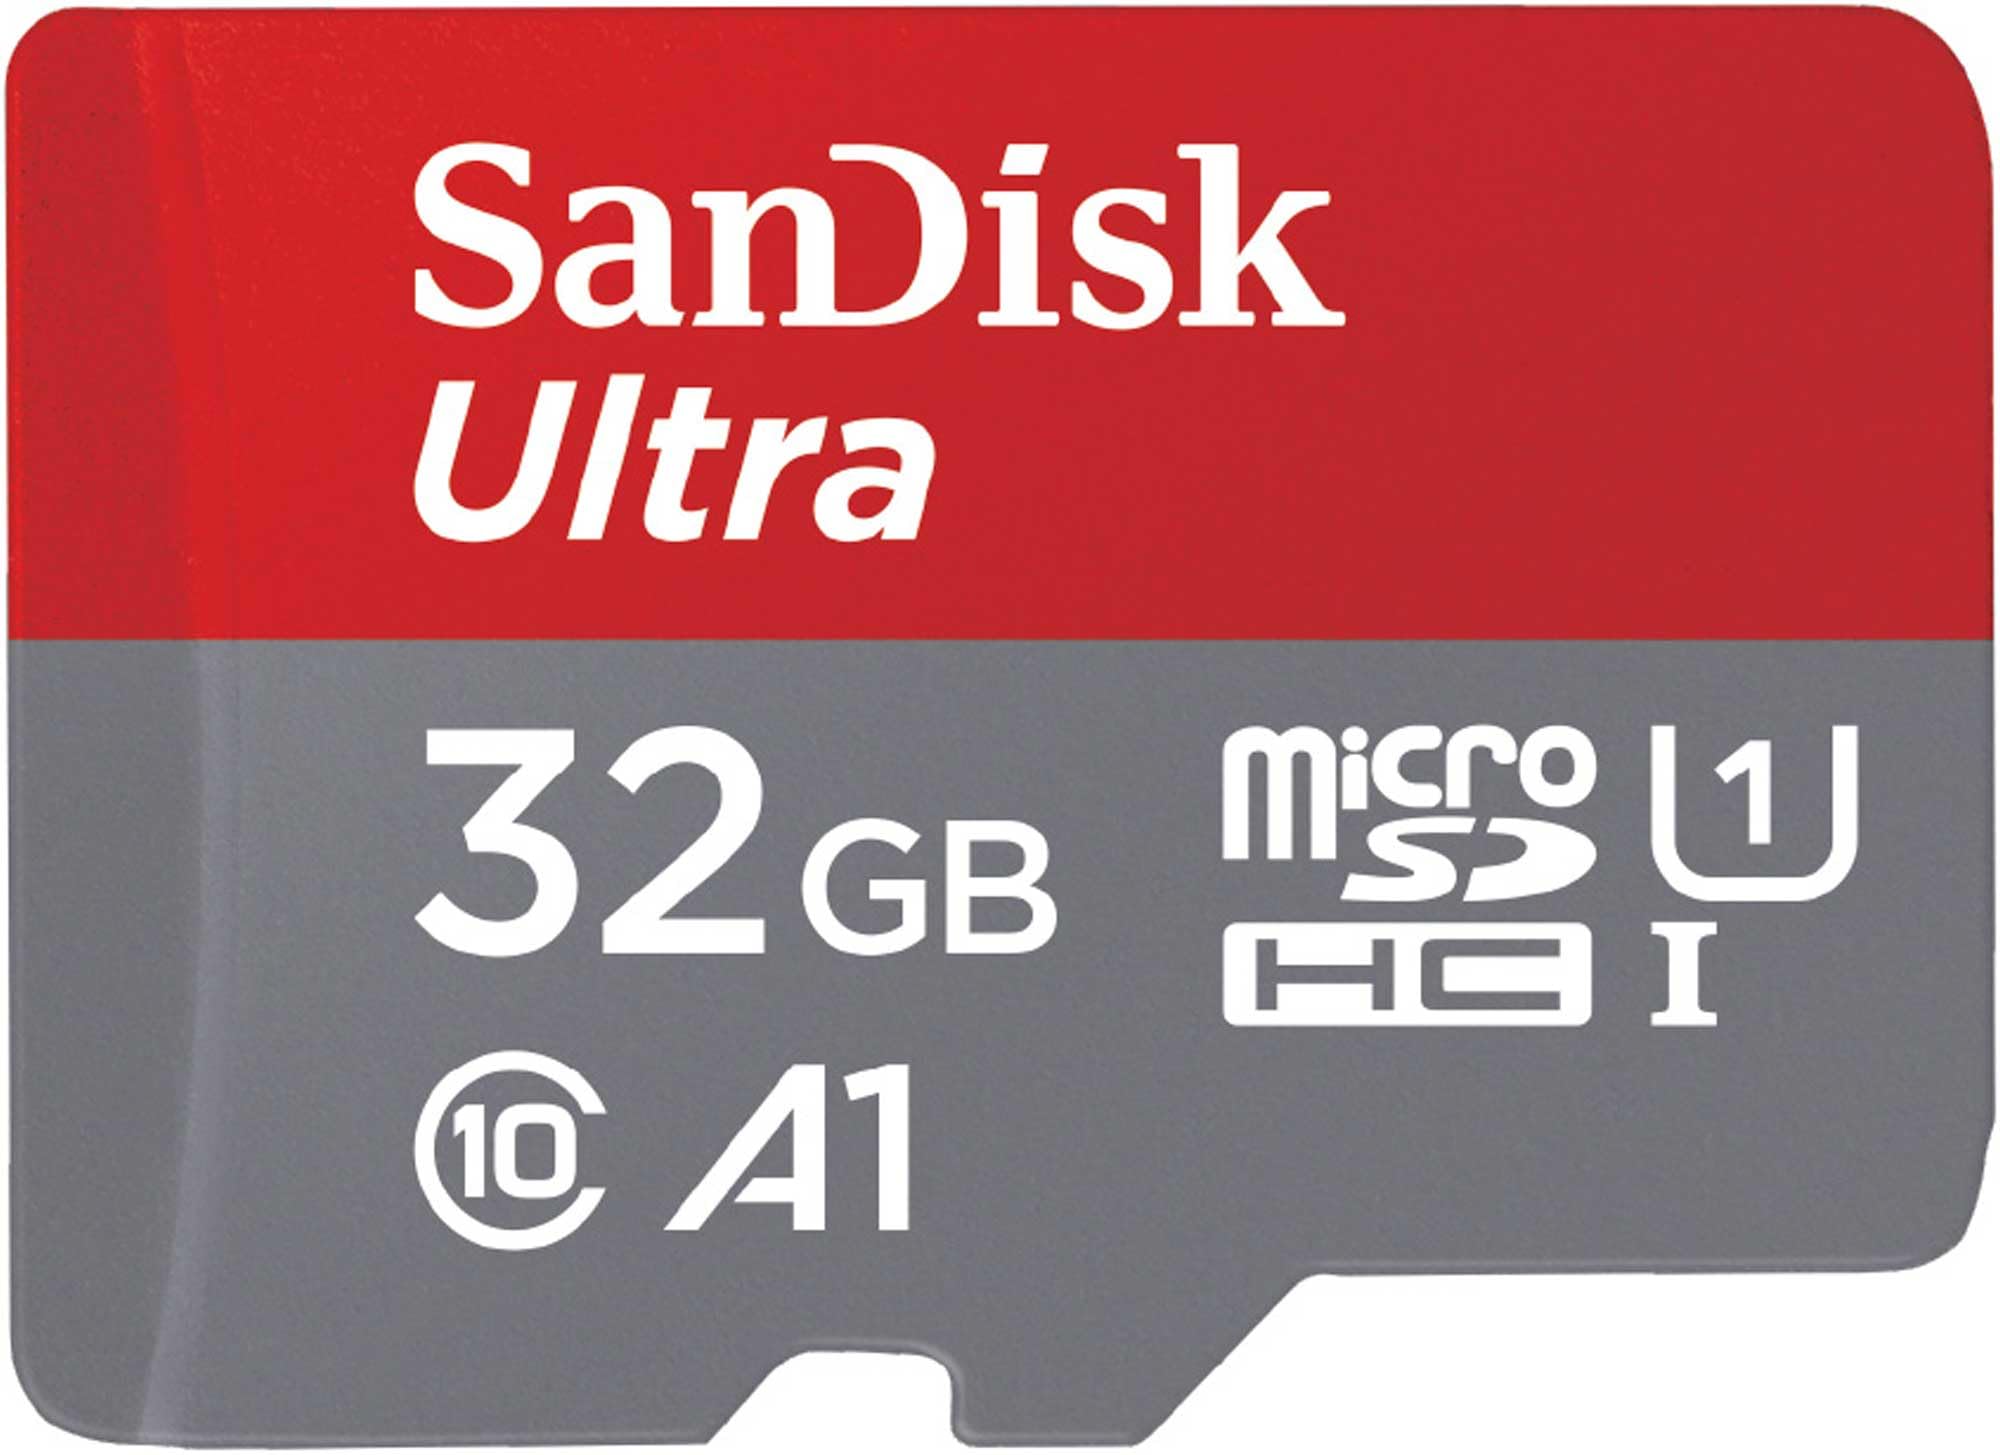 SanDisk サンディスク 正規品 microSDカード 32GB UHS-I Class10 10年間限定保証 SanDisk Ultra SDSQUA4-032G-GH3MA 新パッケージ